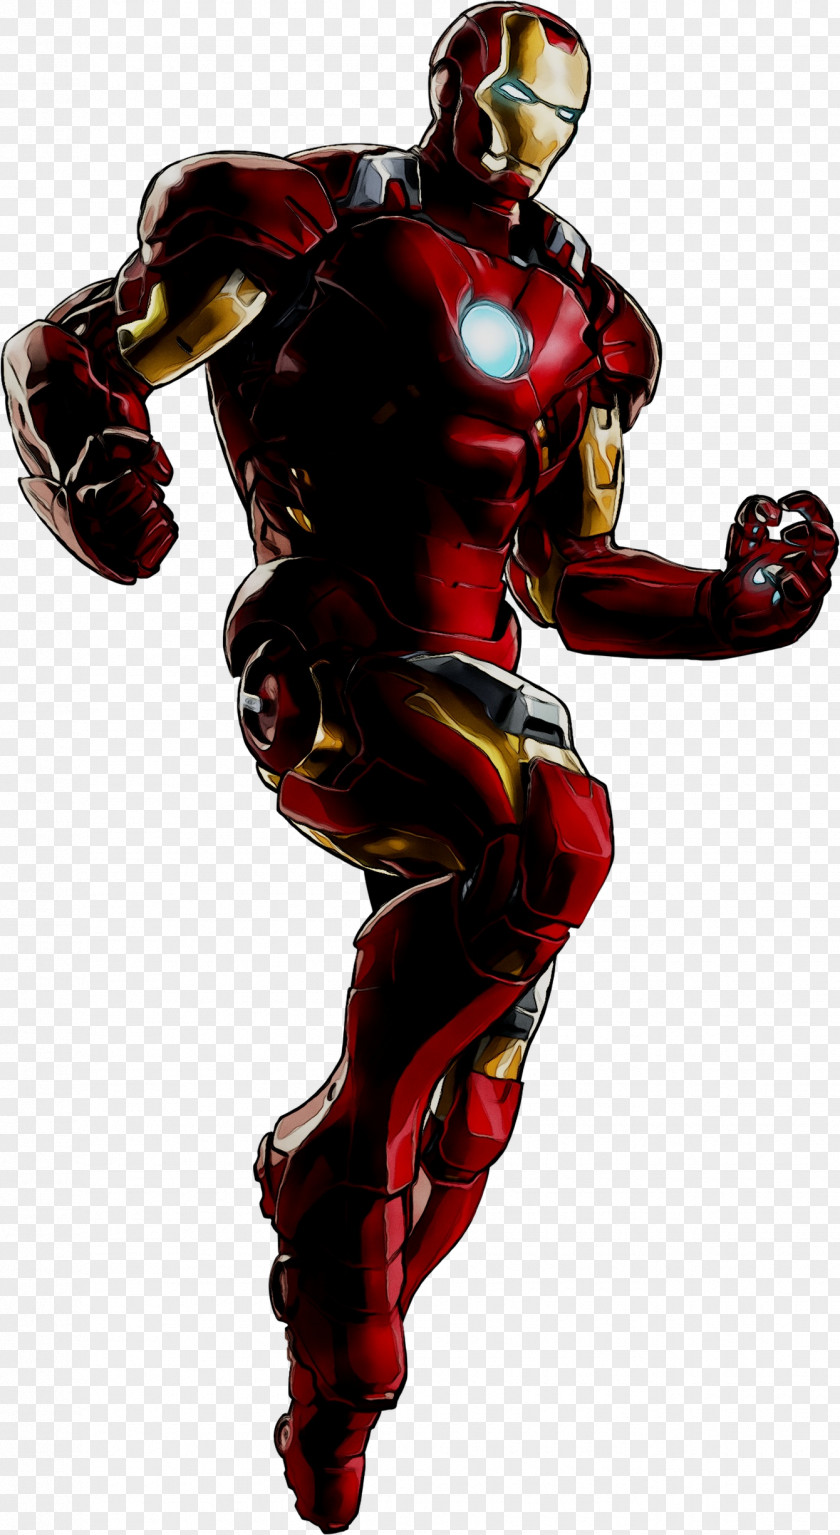 Iron Man Black Widow Hulk Image PNG